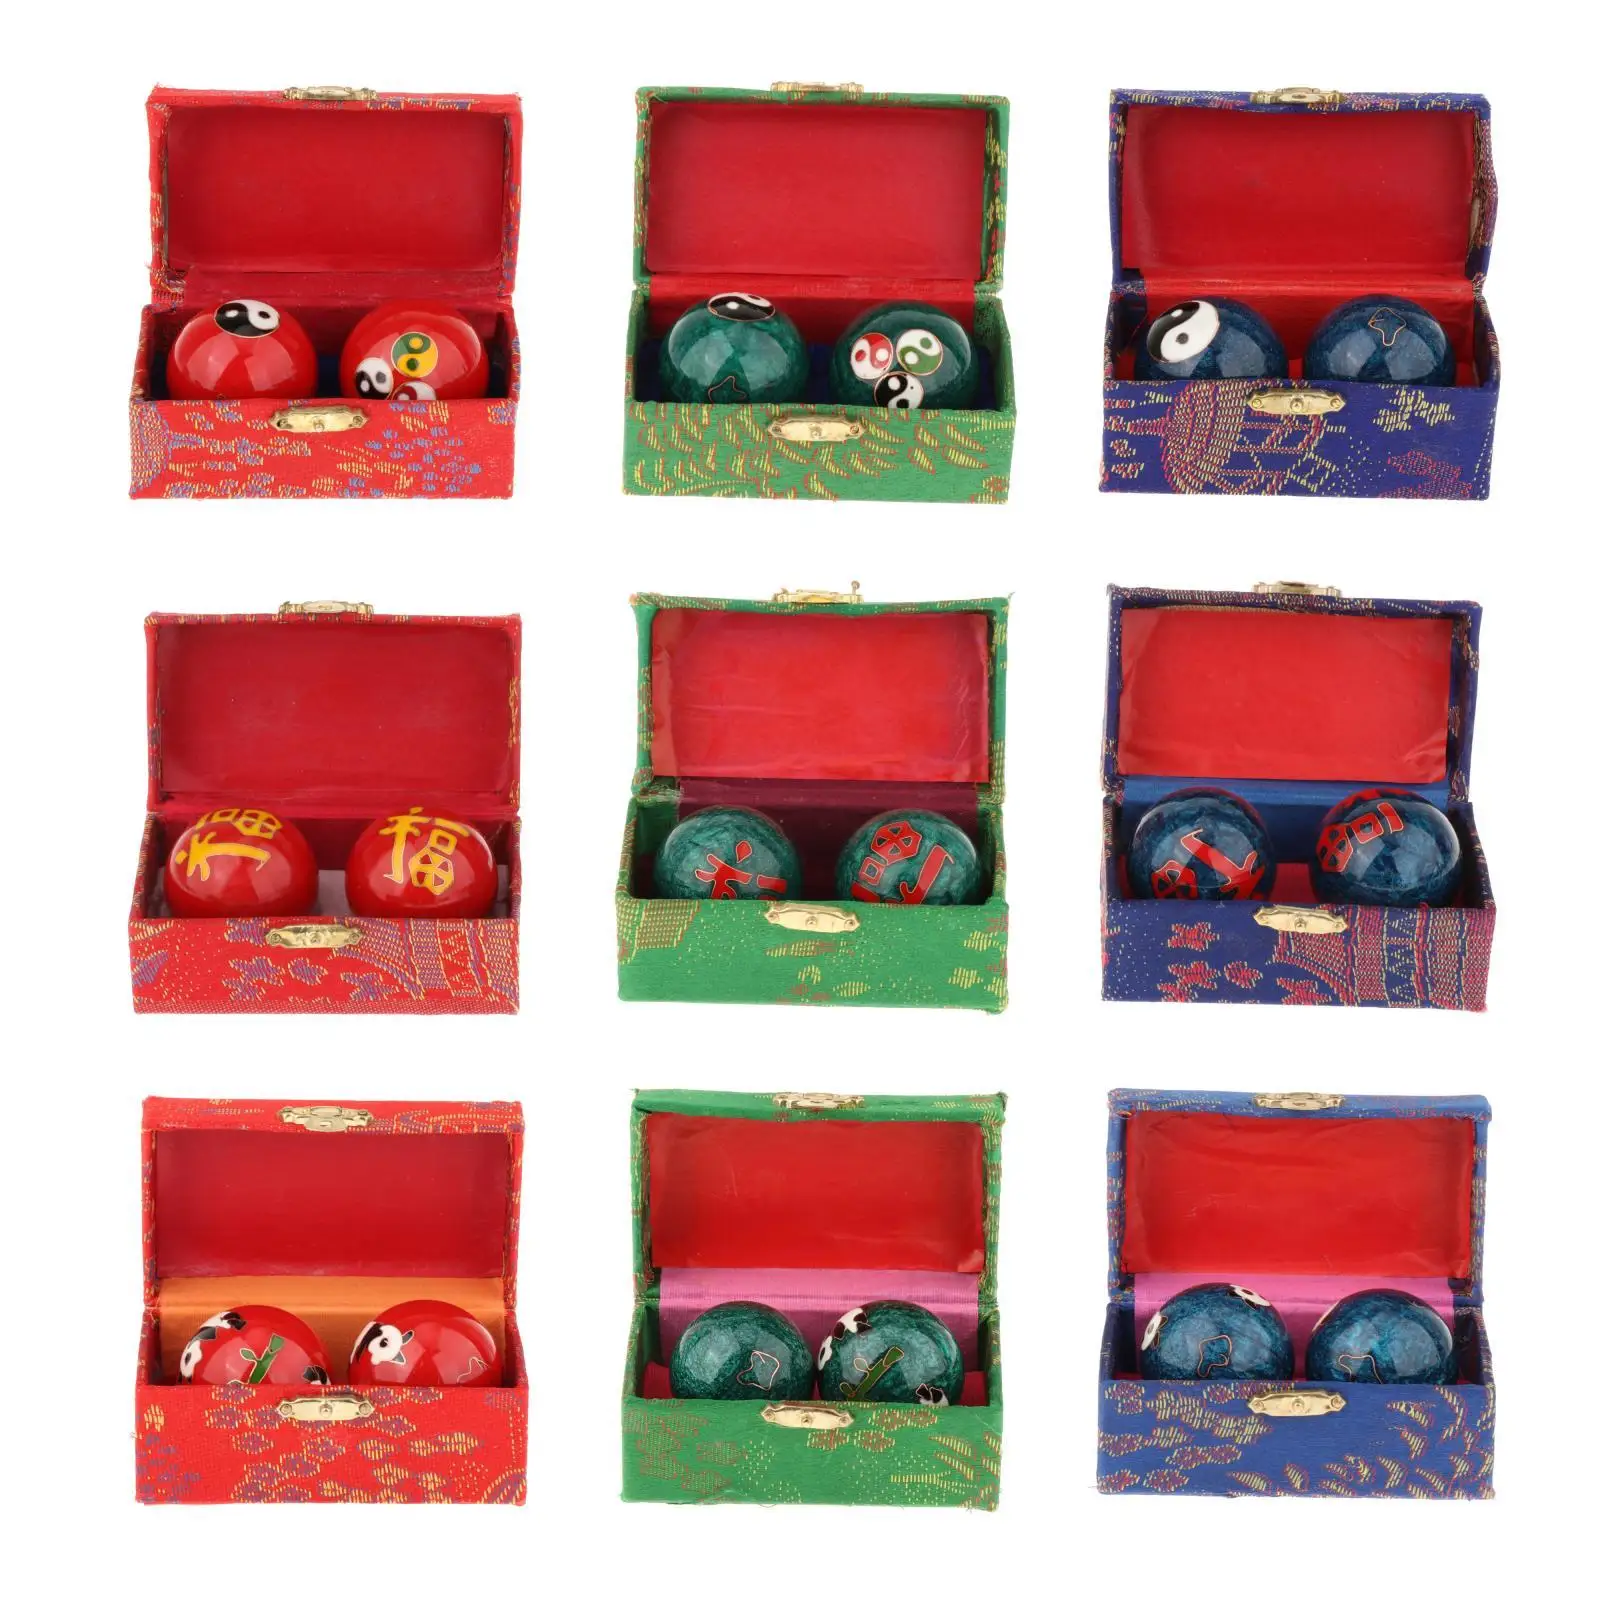 2x Hand Massage Balls with Storage Box Reusable Compact Durable Relieve Stiffness Baoding Balls for Elderly Kids Seniors Parents